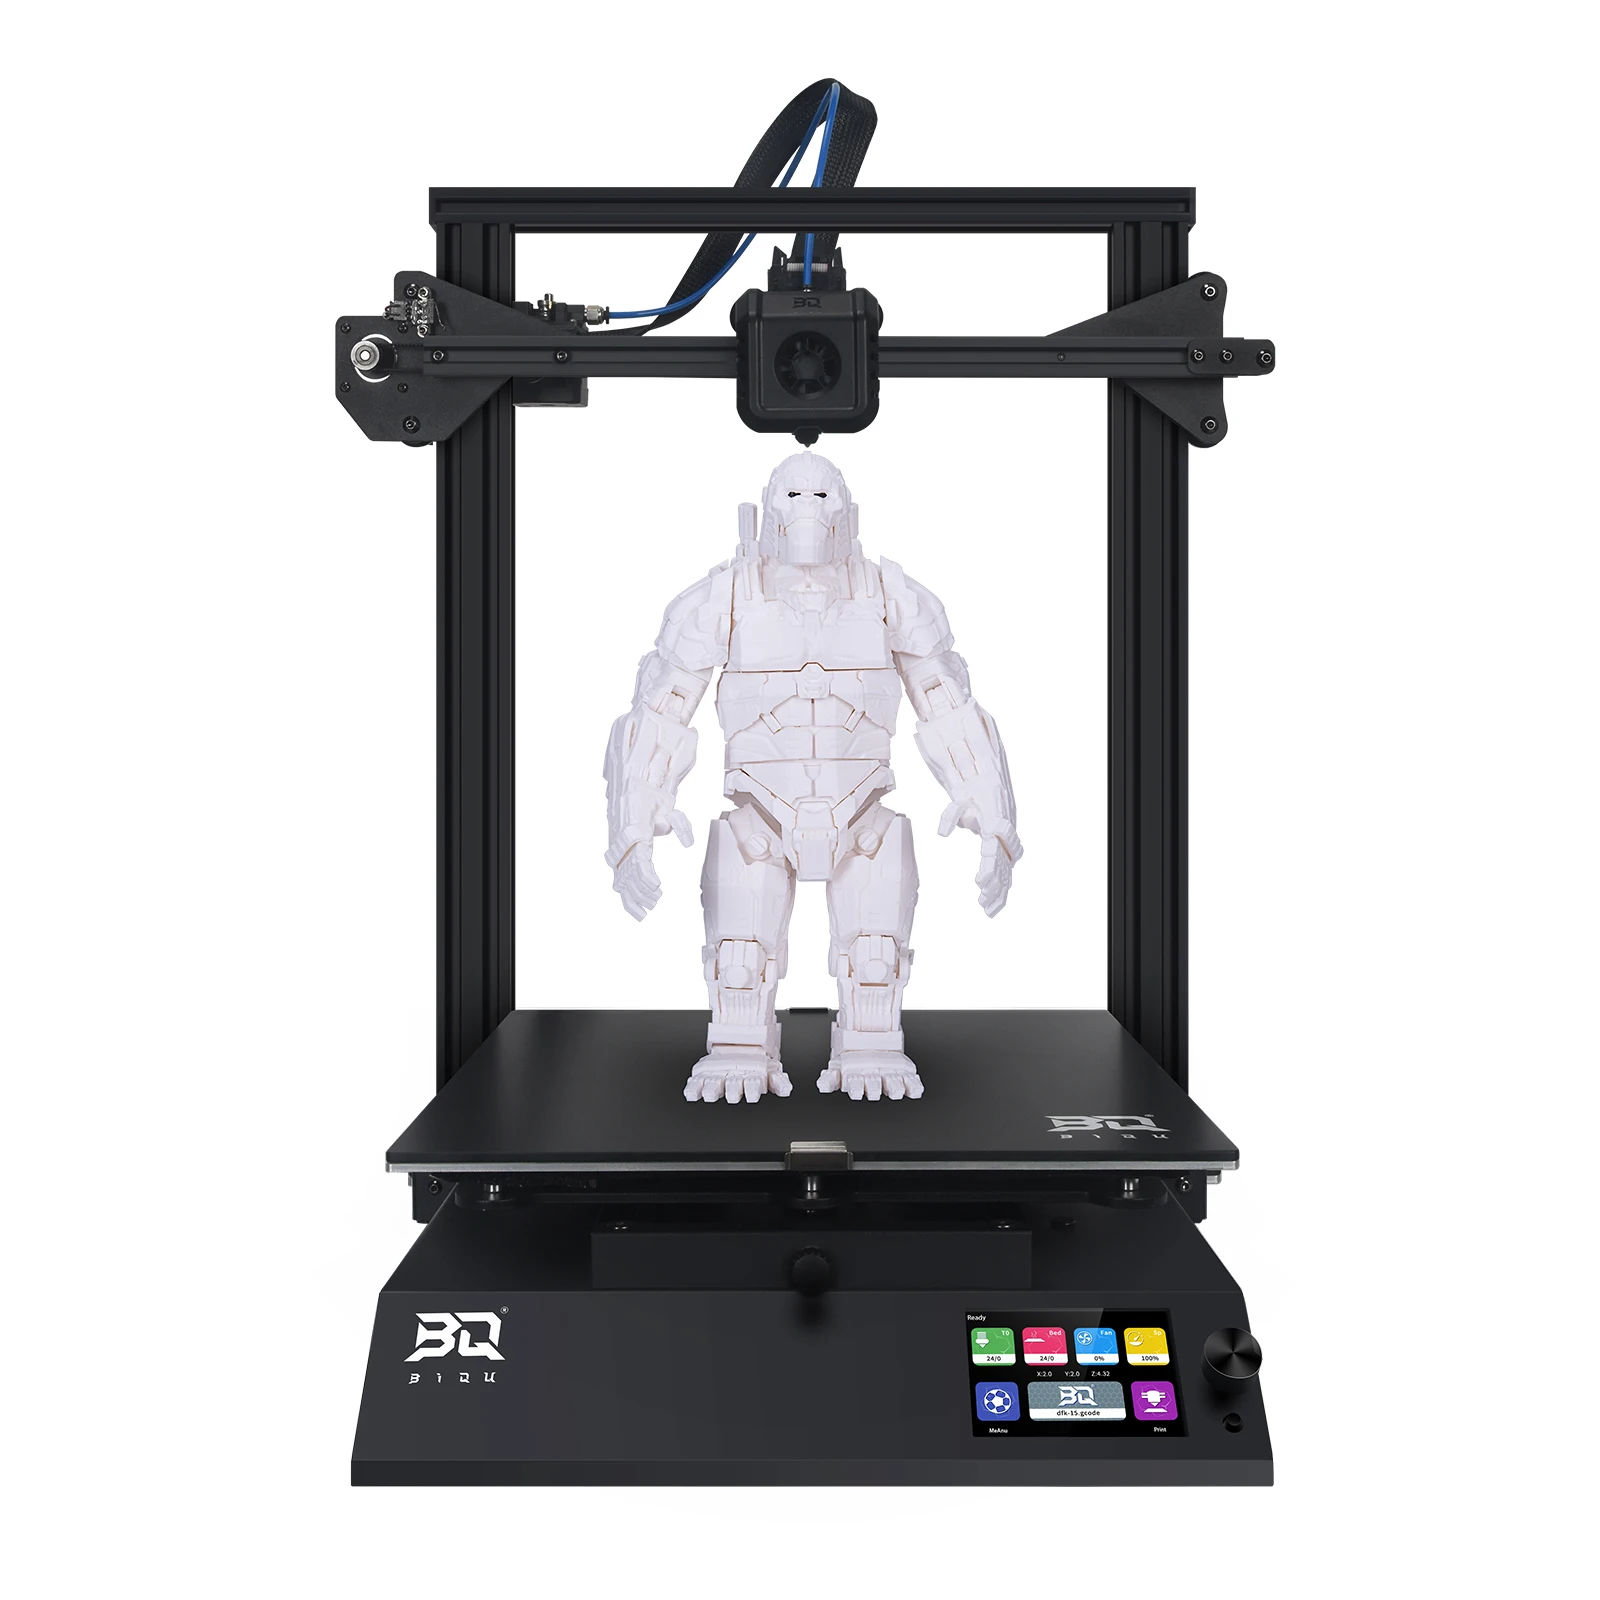 BIQU B1 3D Printer 32Bit Motherboard High Precision Printing Upgraded Kit DIY 3D HD Touch Screen Pringting